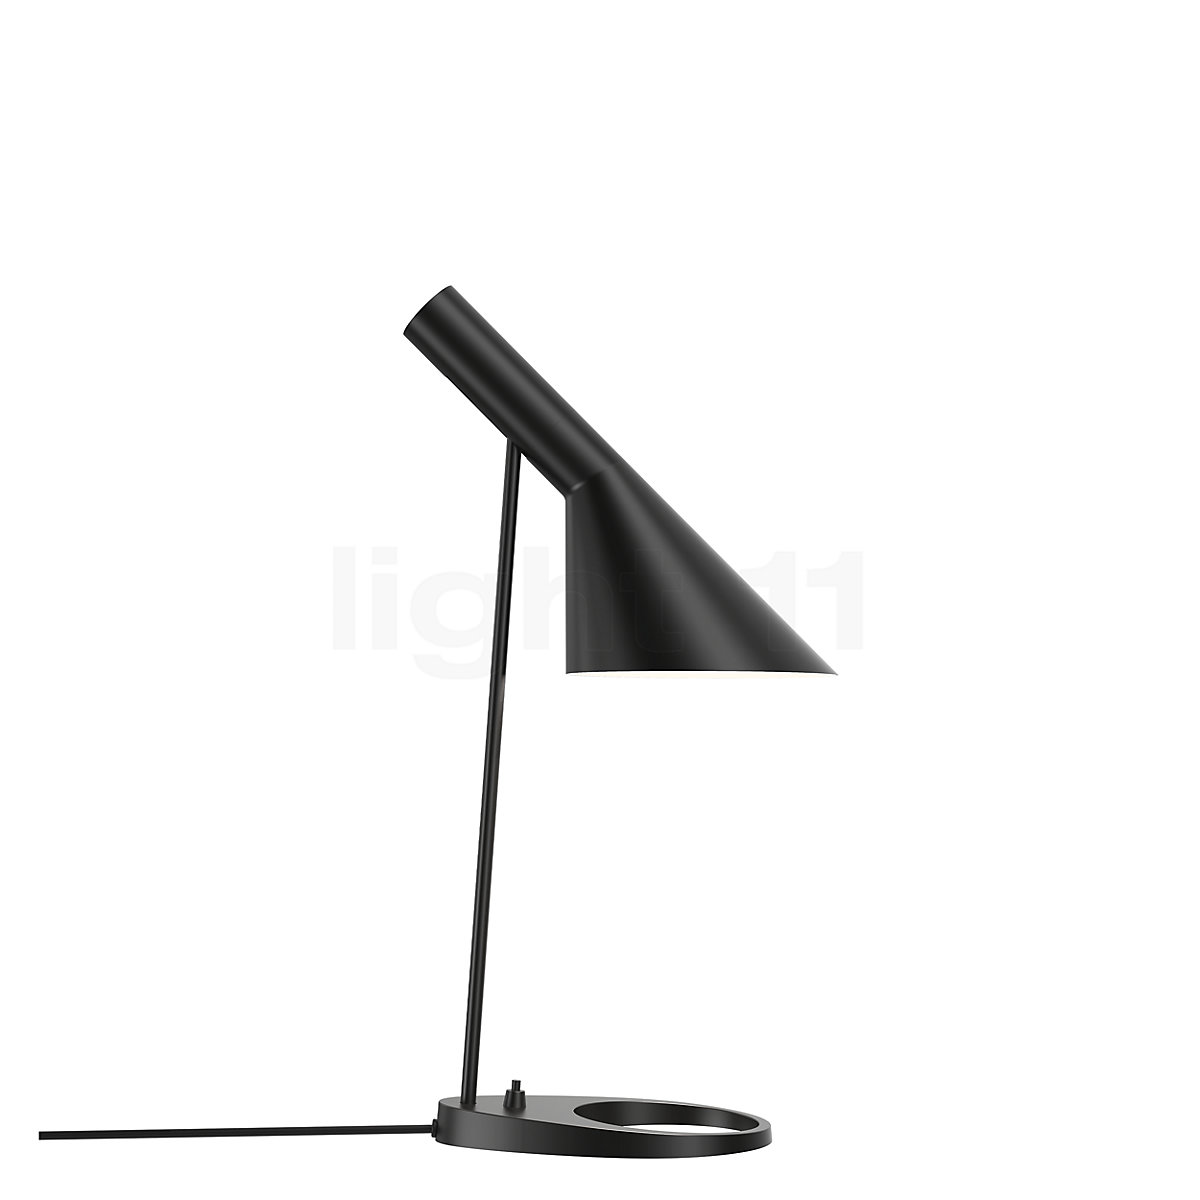 Arne Jacobsen - Floor Lamp Produced by Louis Poulsen